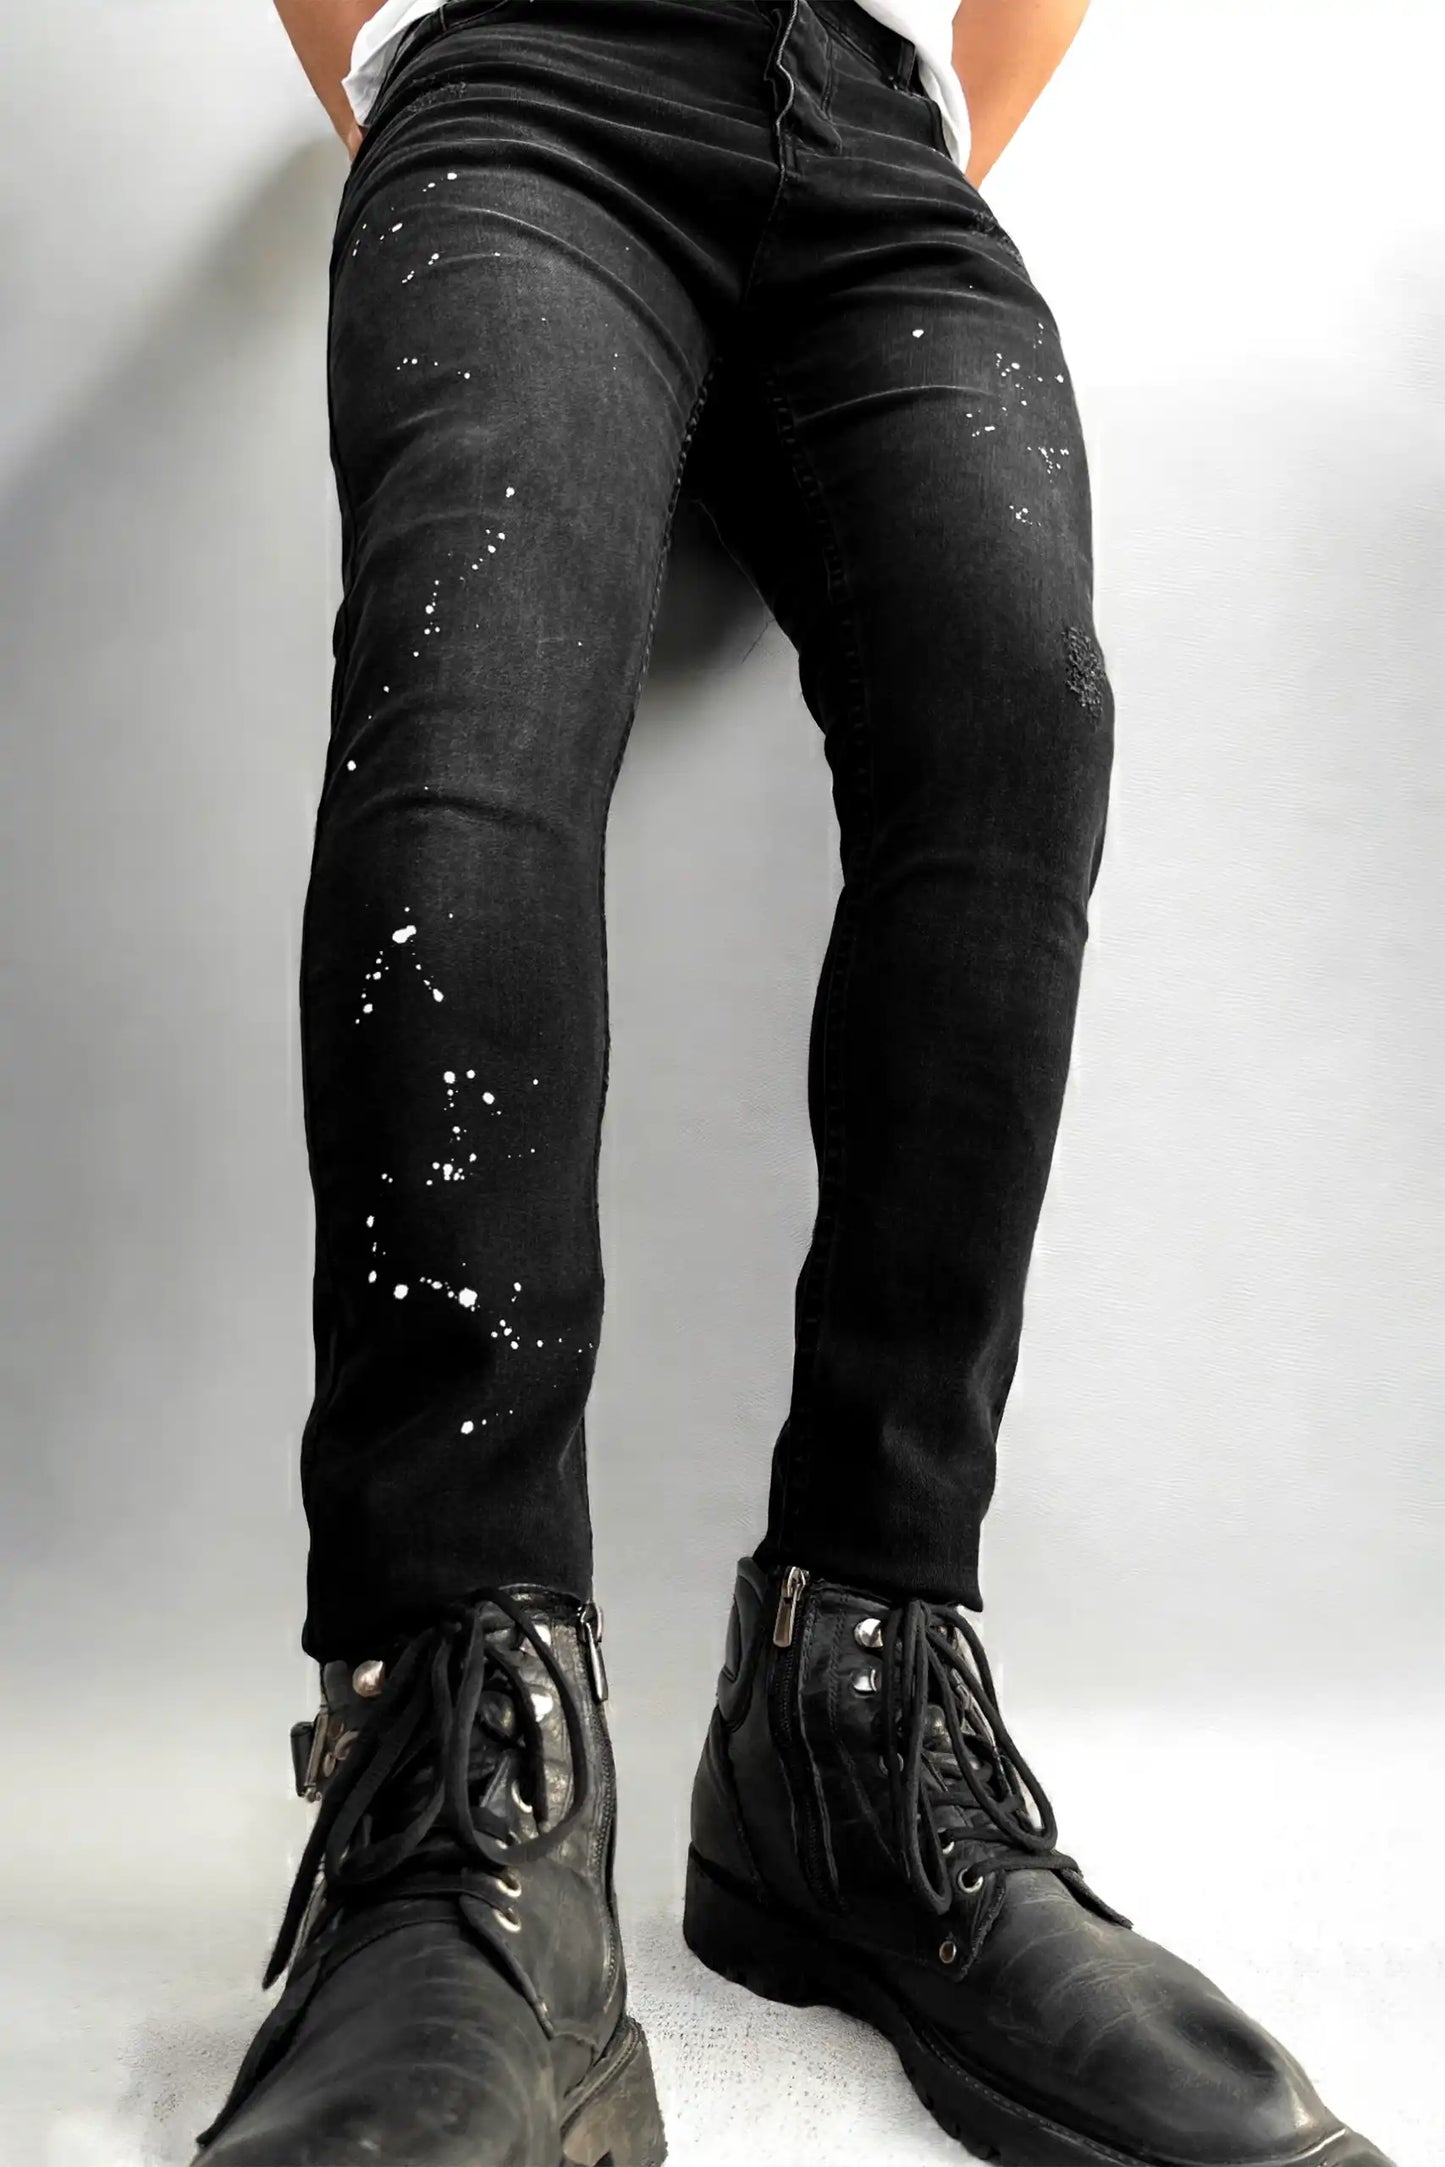 Faded Black Paint Splatter Jeans - Muscle Fit